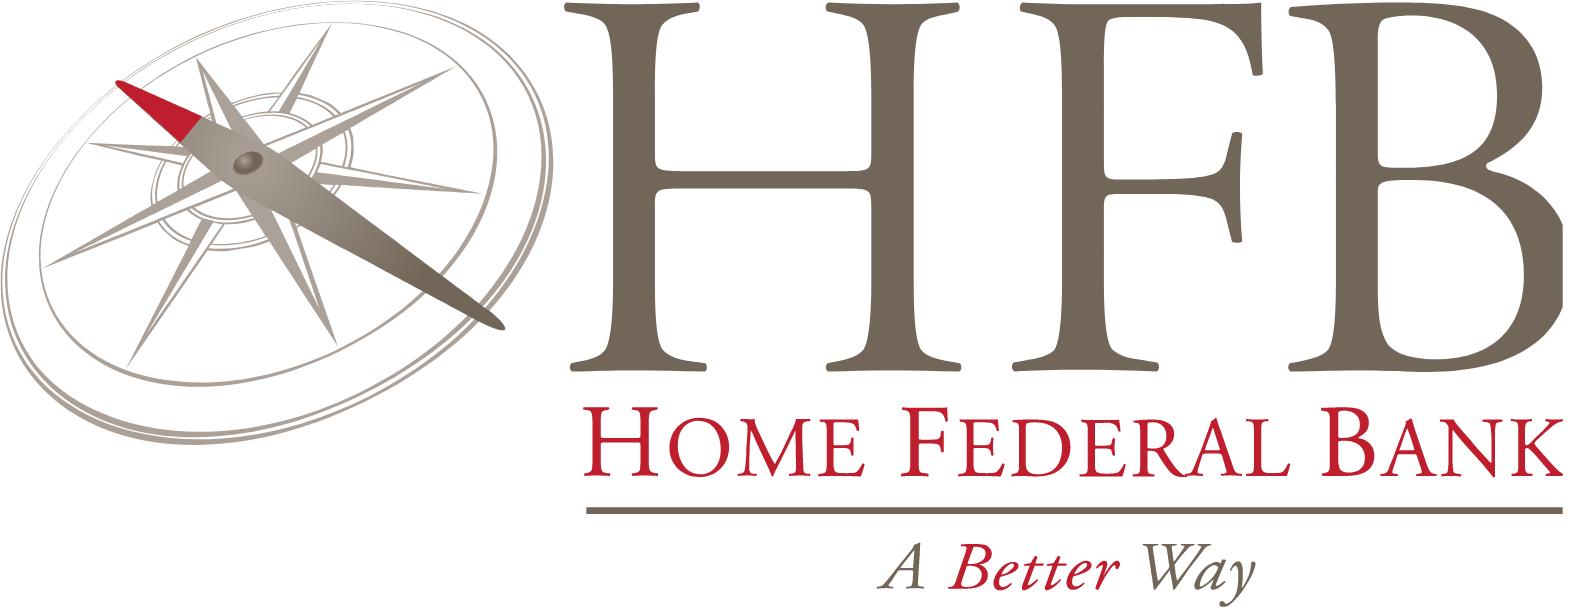 Home Federal Bancorp (HFB Bank) logo large (transparent PNG)